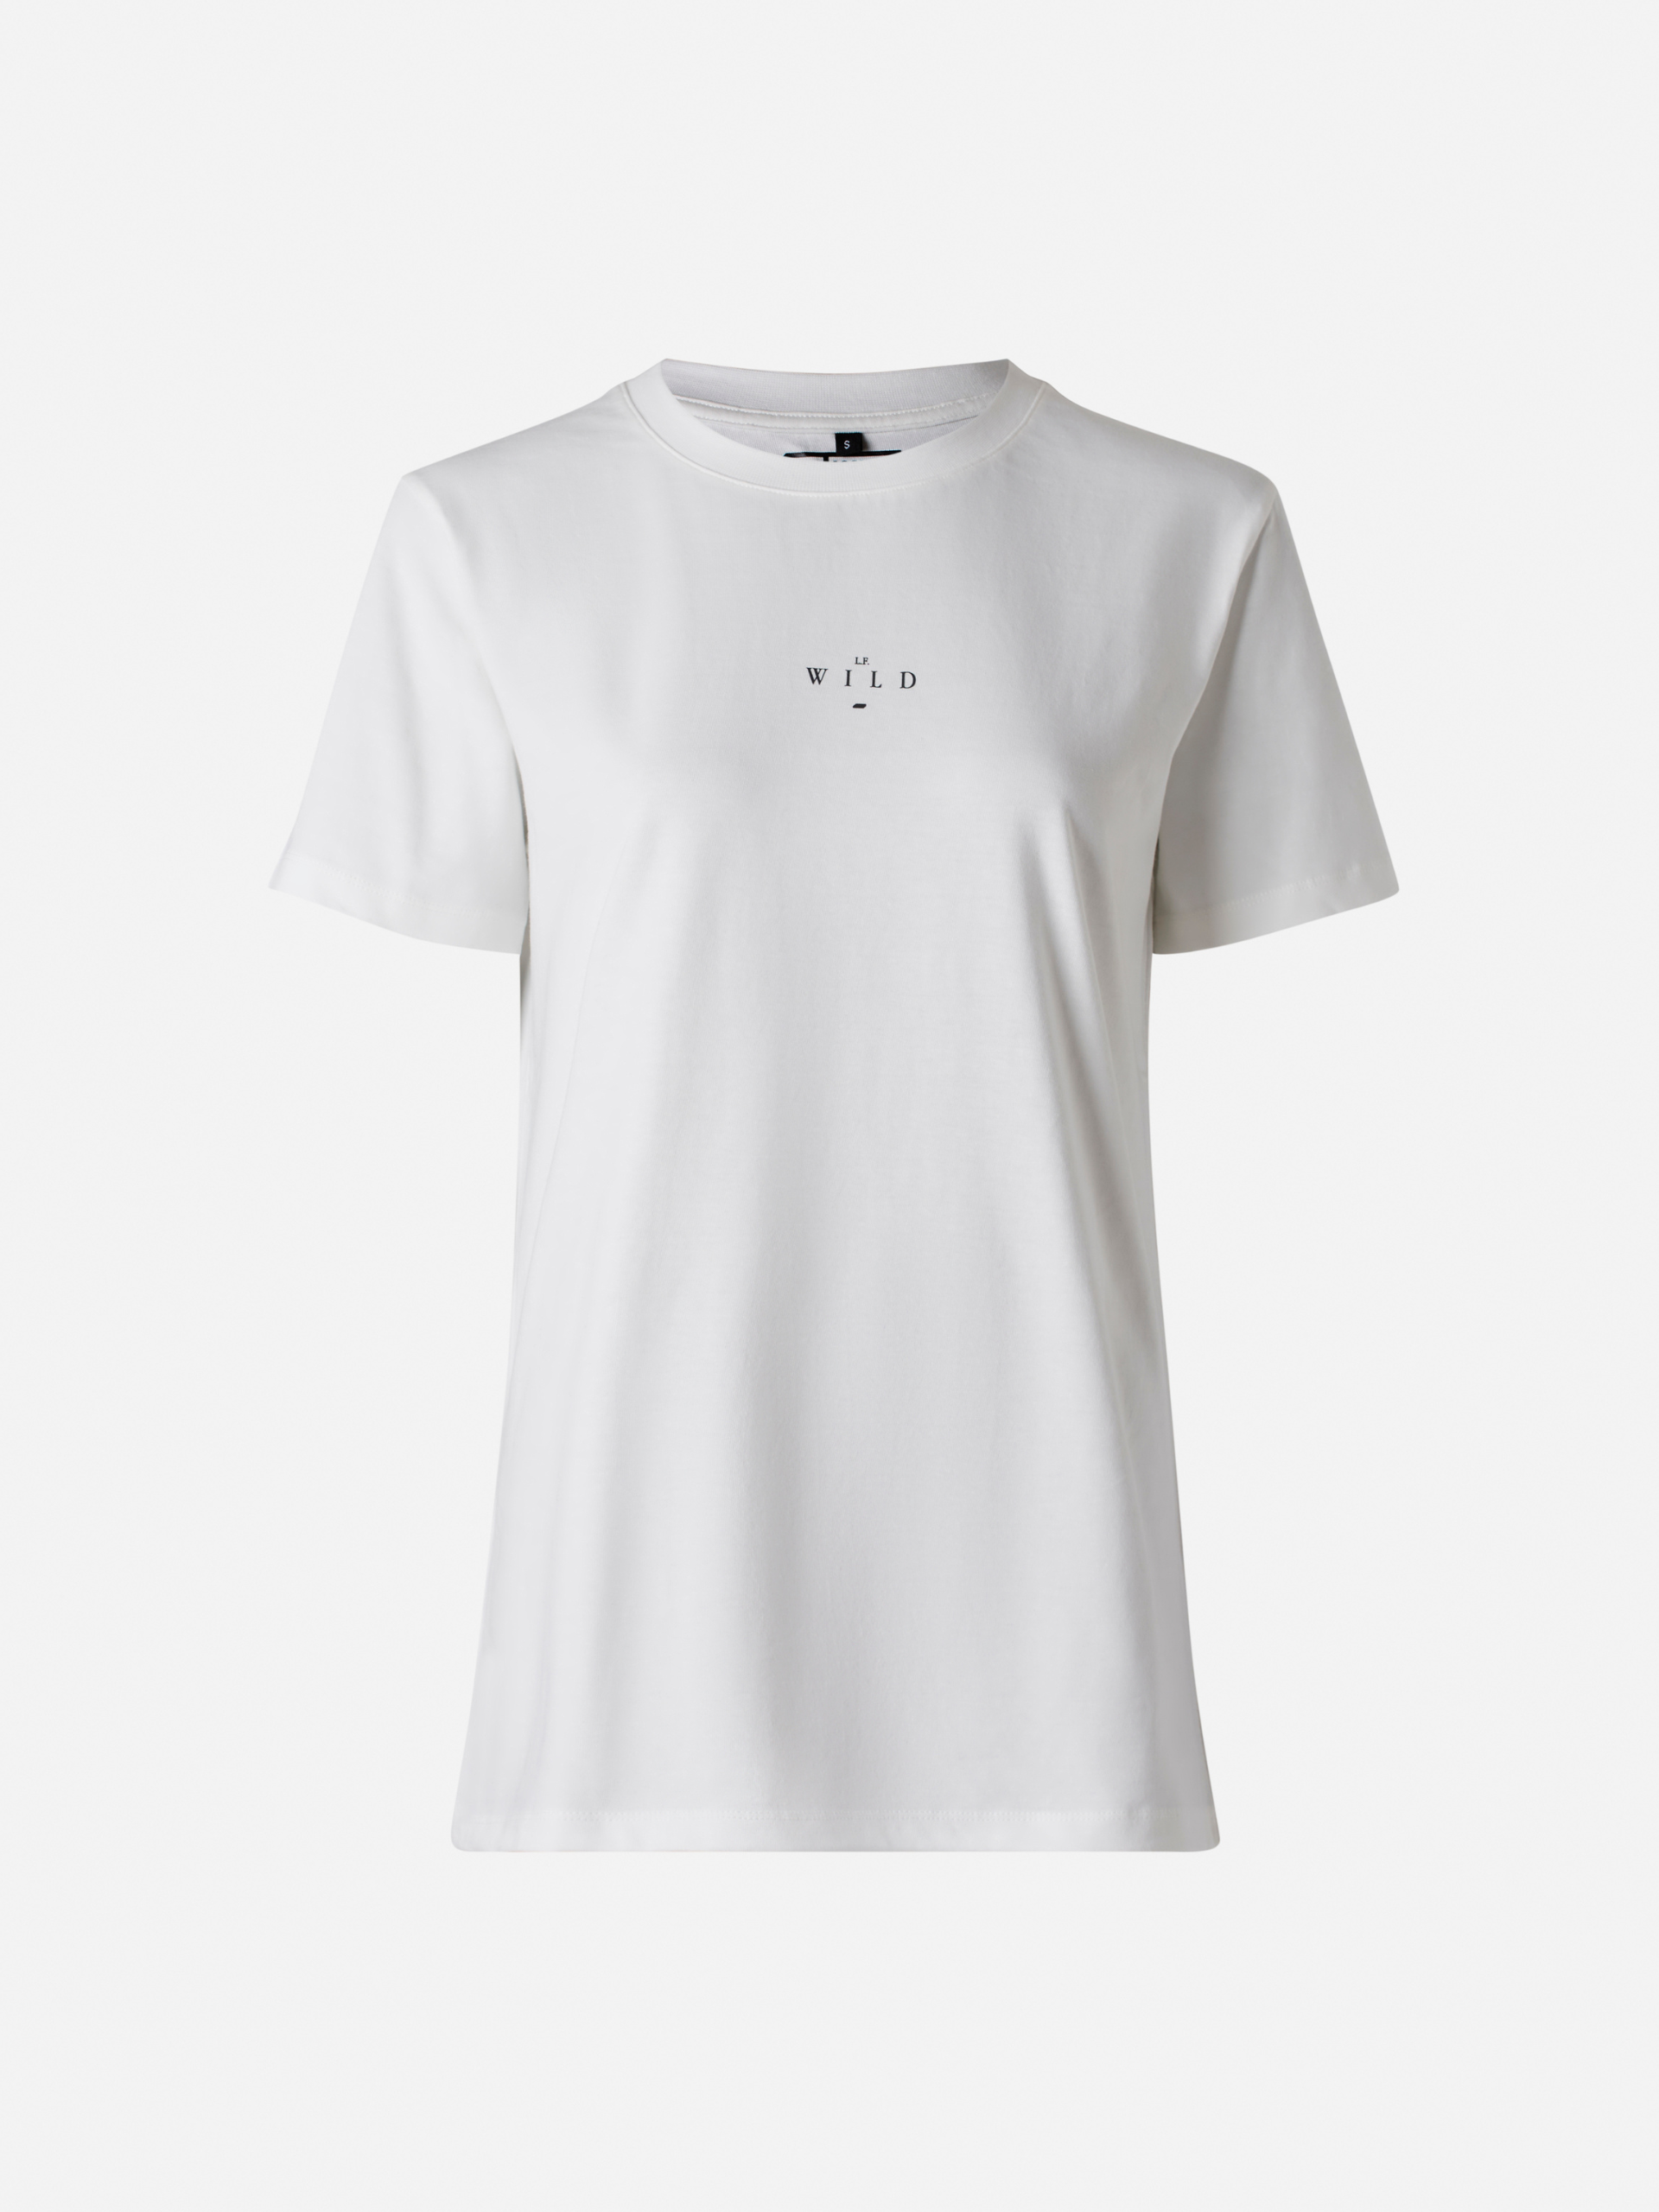 T-shirt unisexe Wild Optic White